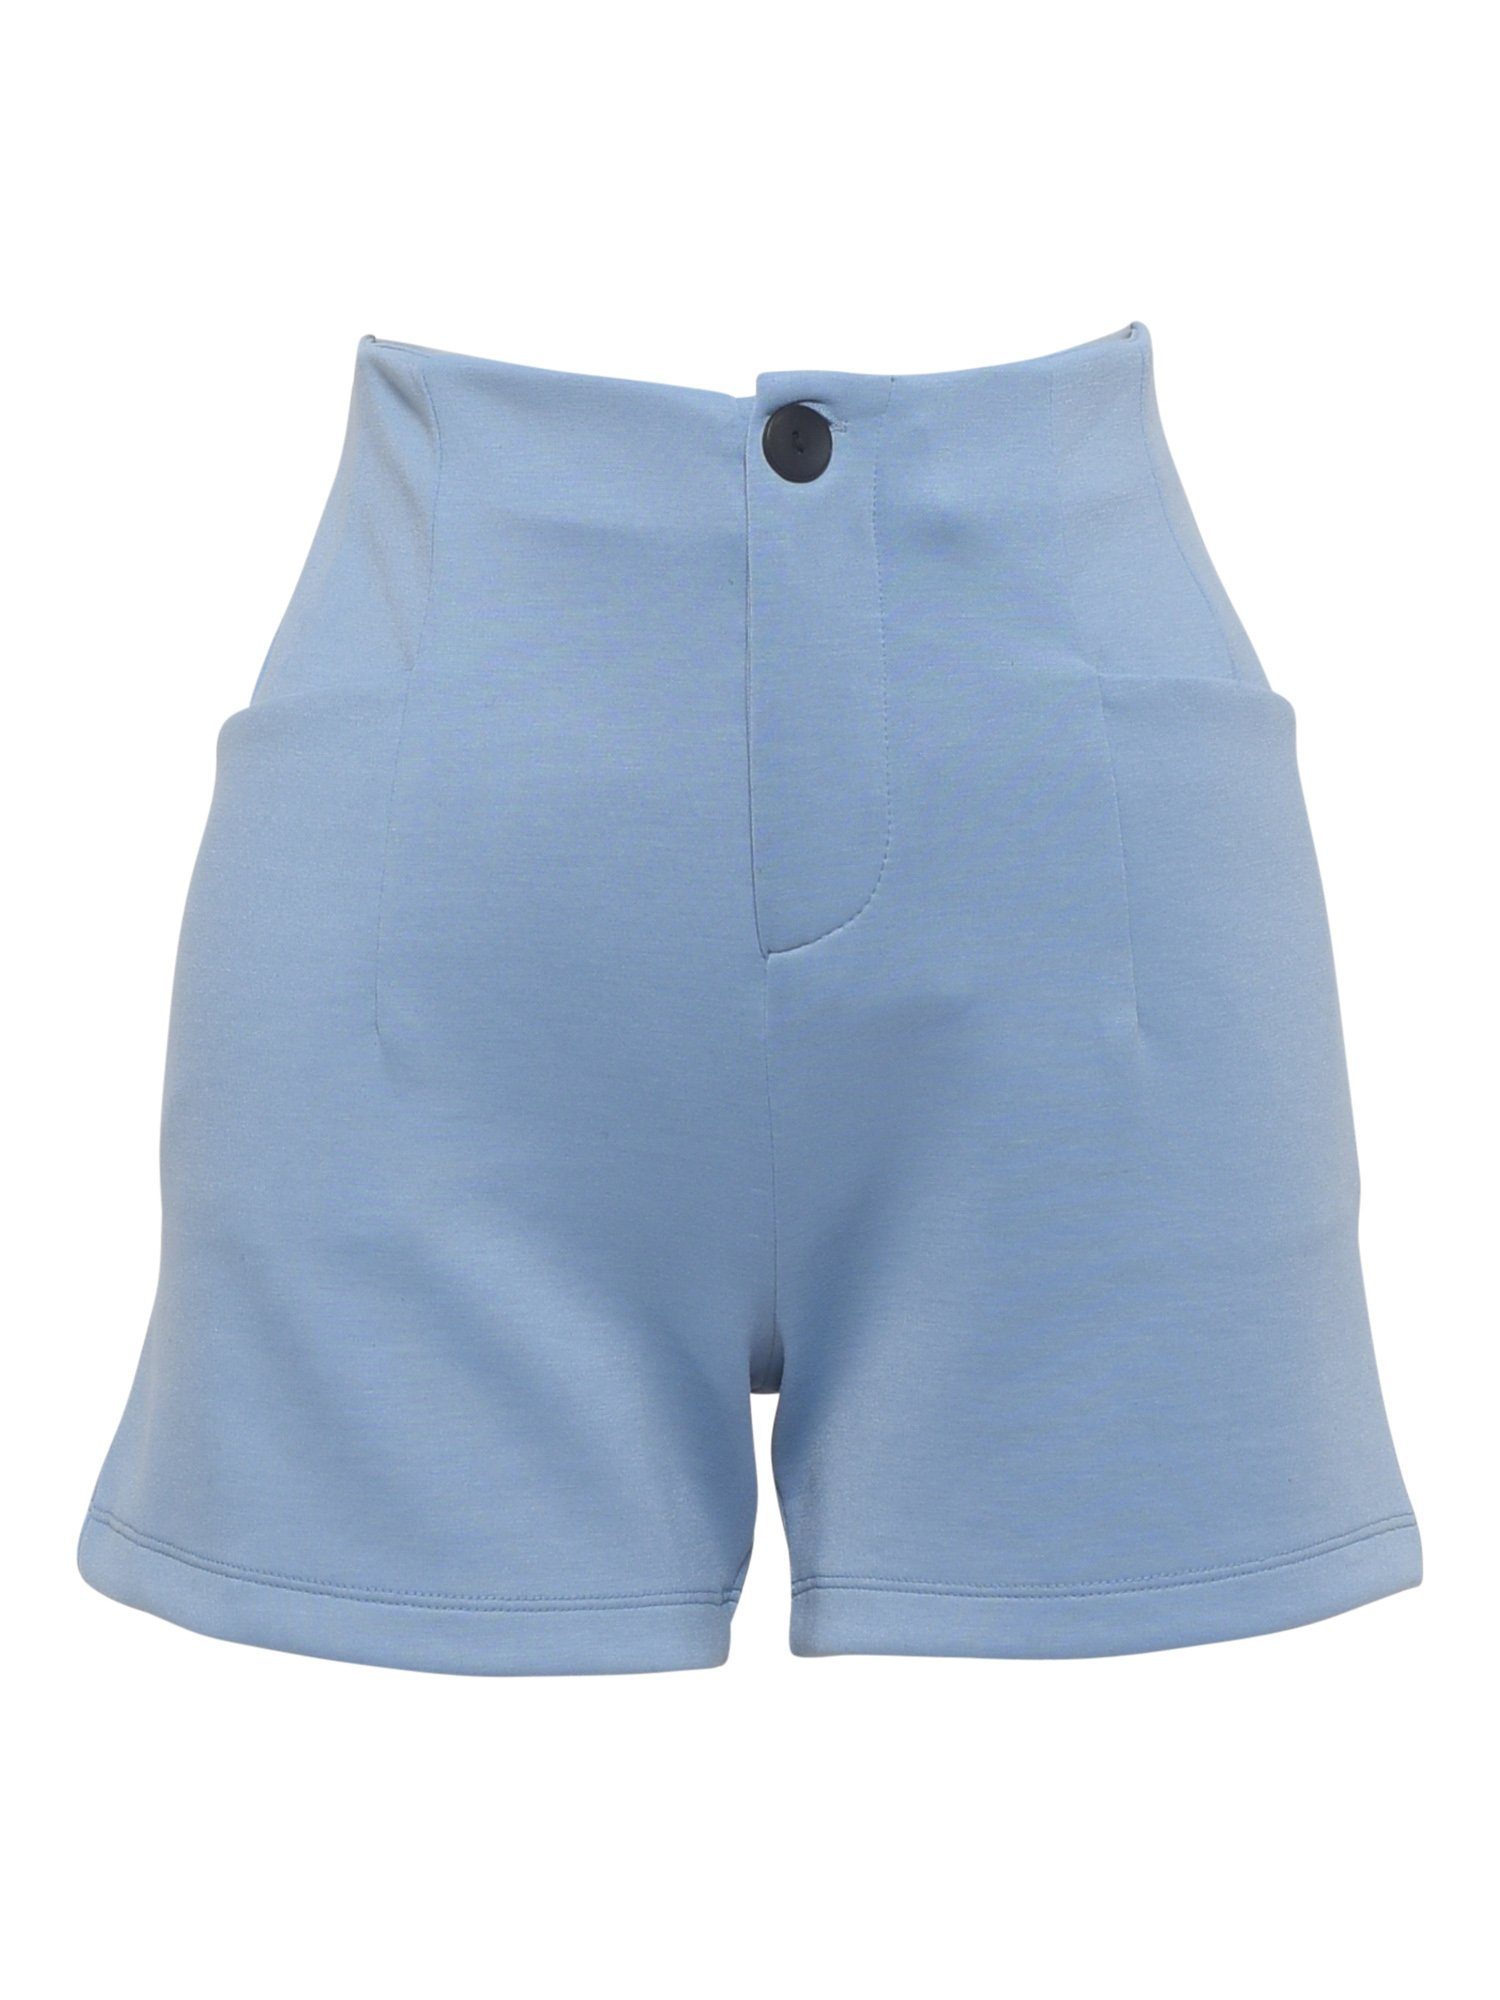 Freshlions Shorts blau 'Wilma' Shorts